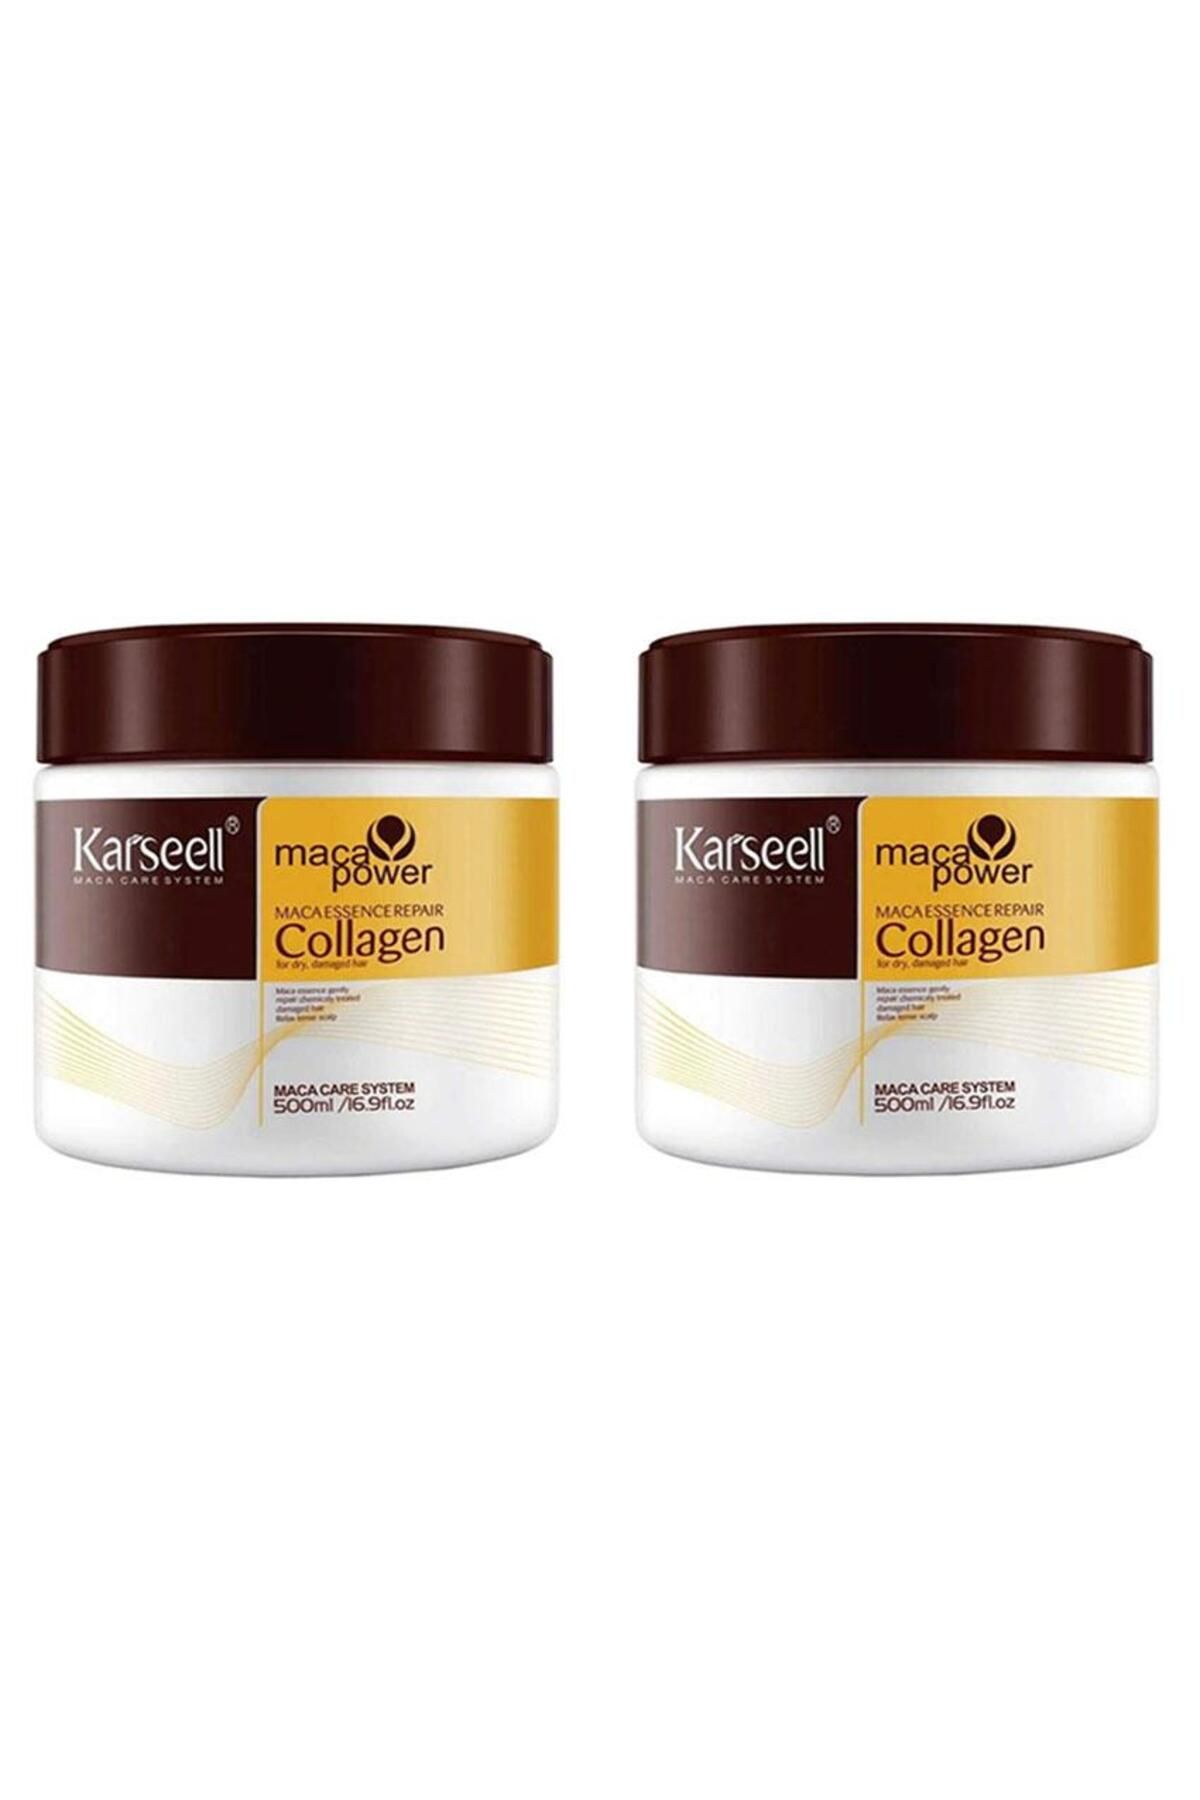 Fontenay Karseell Collagen Saç Maskesi & Buğday Proteinli 500 ml 2'li Set